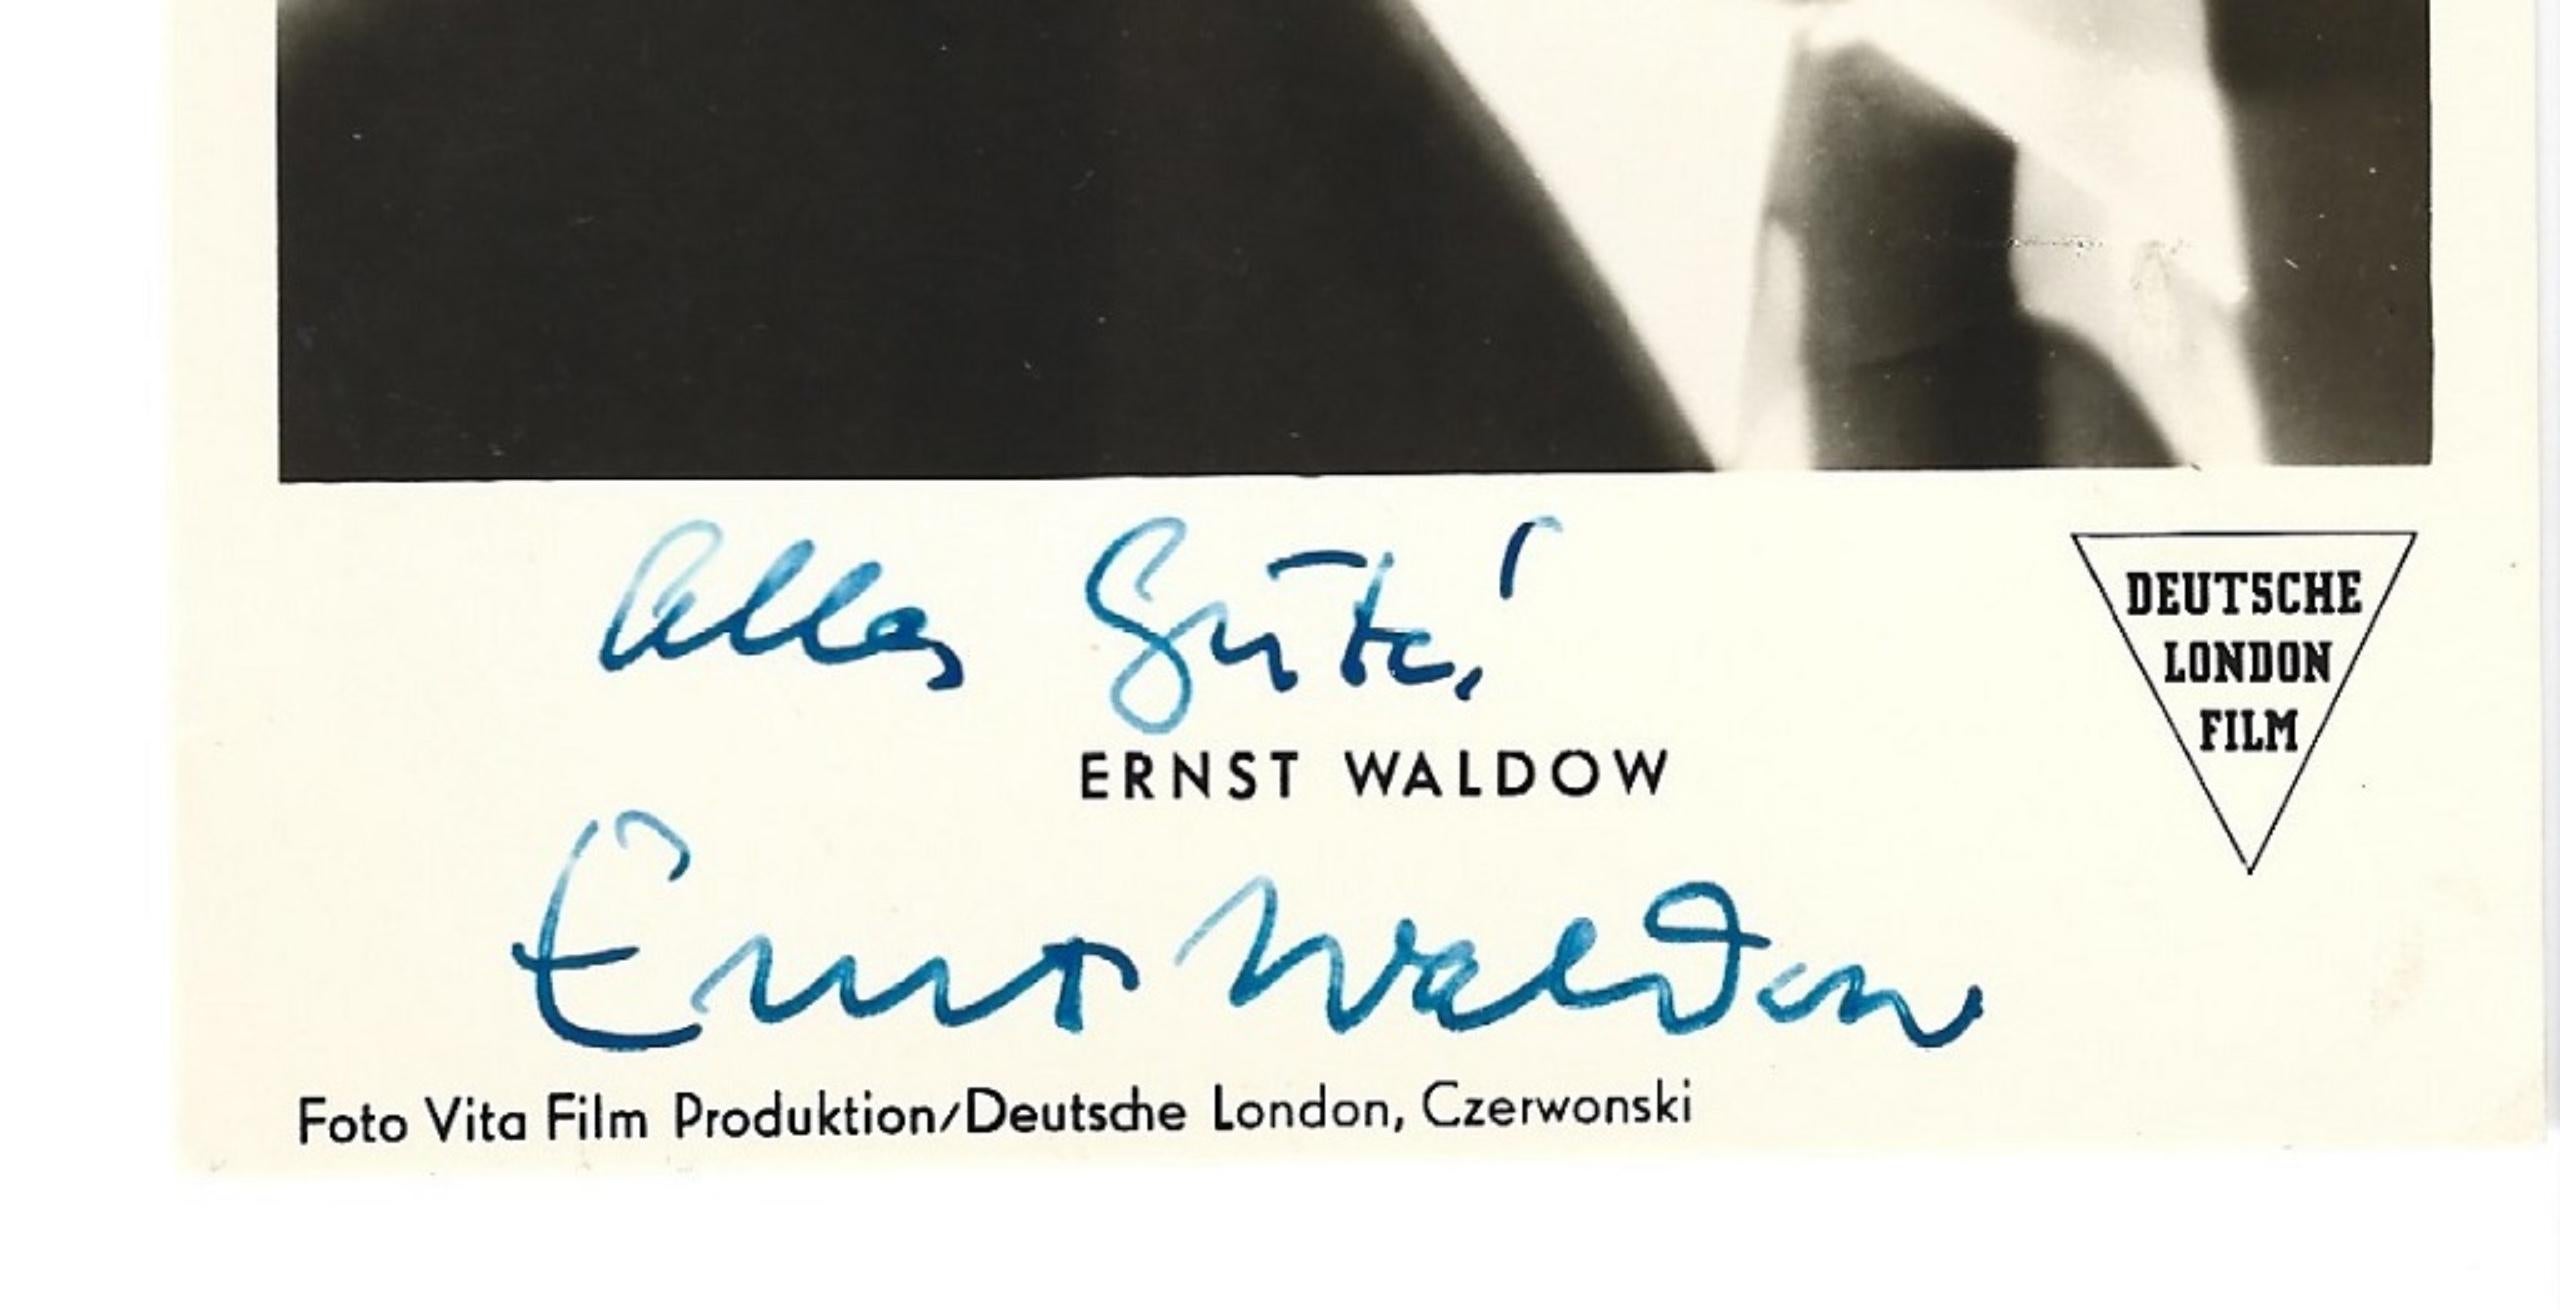 Autographed Portrait of Ernst Waldow - Vintage b/w Postcard - 1950s - Photograph by Unknown